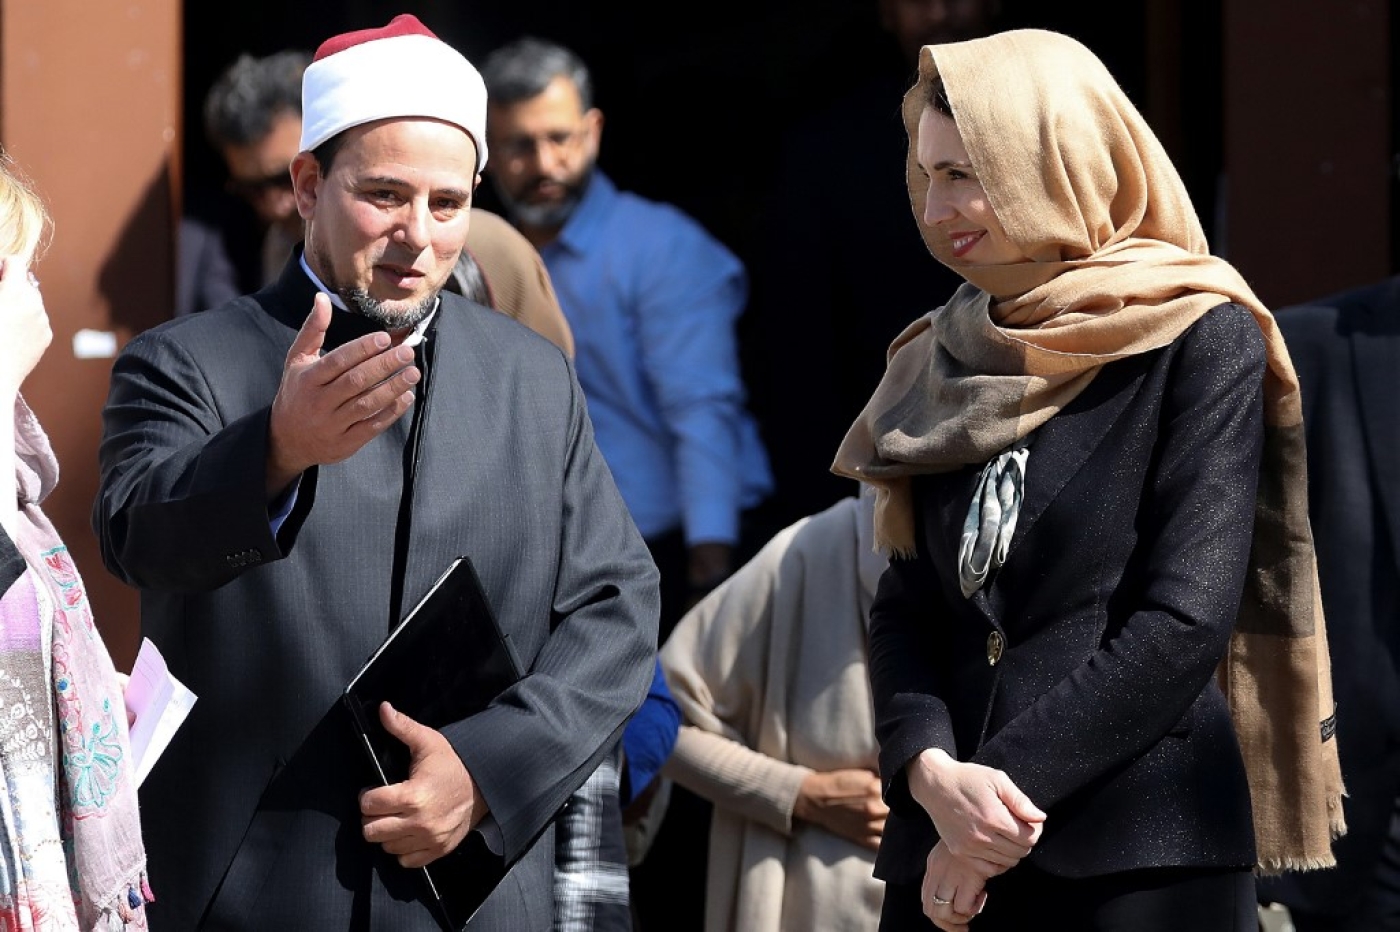 Jacinda Ardern (R) walks with Gamal Fouda (L), the imam of the Al Noor mosque